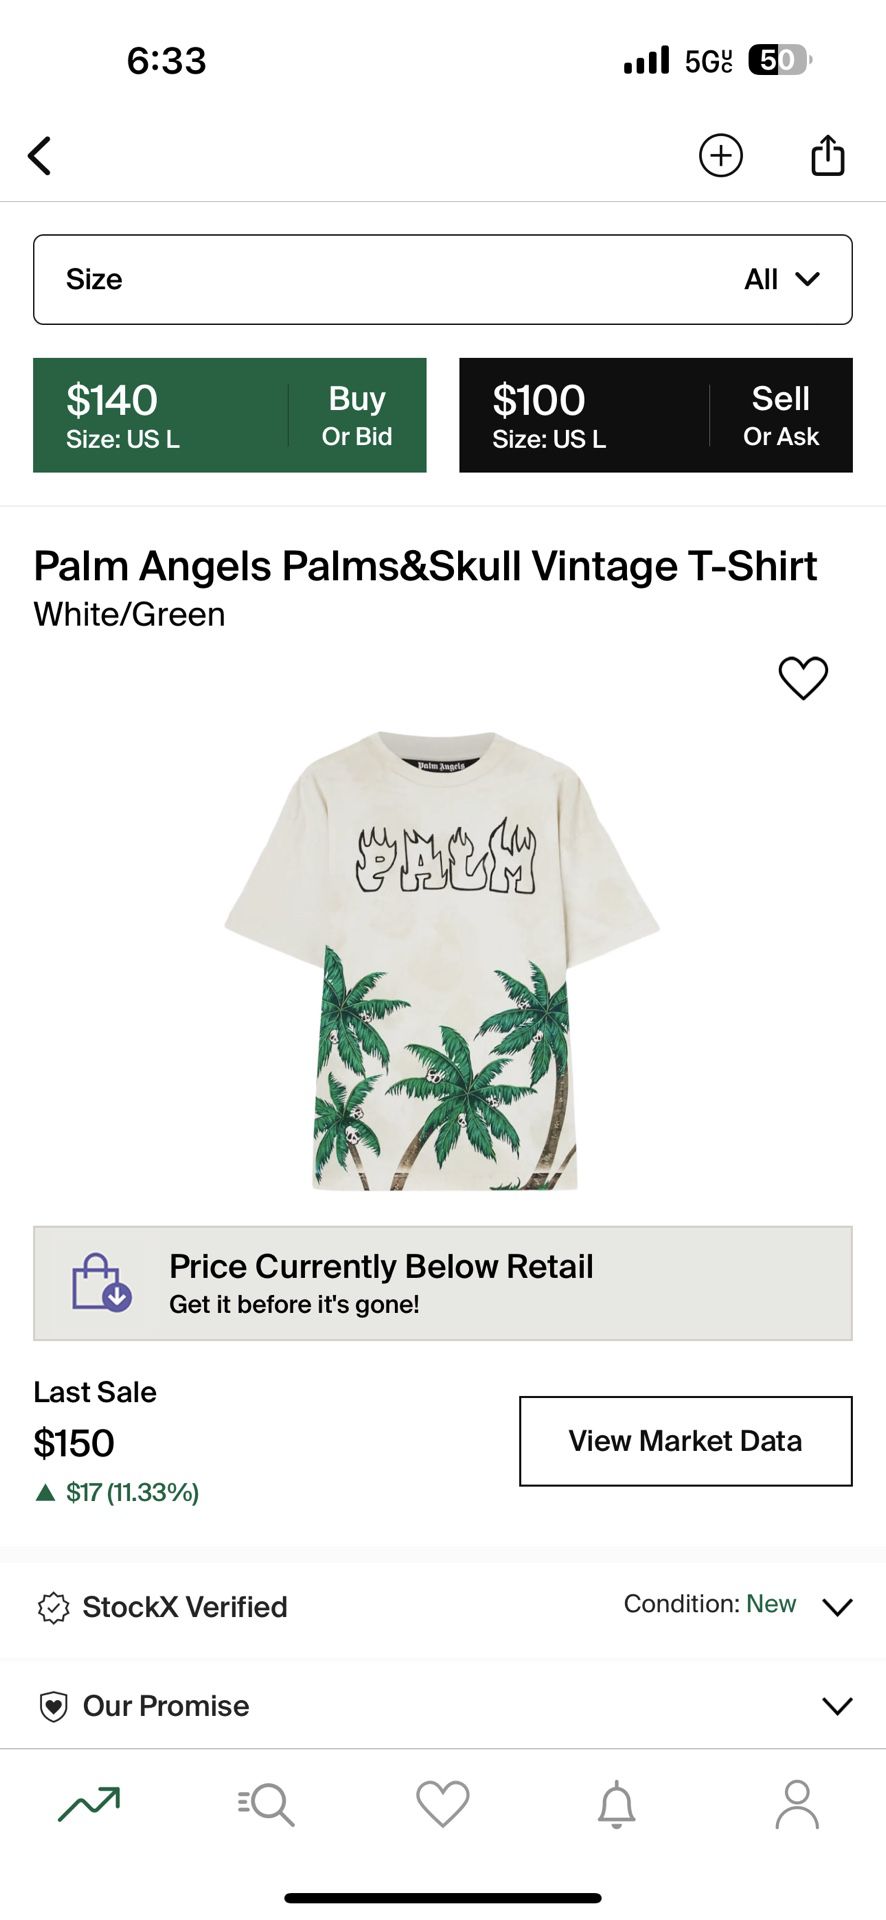 1:1 Palm Angels Palms&Skull Vintage T-Shirt